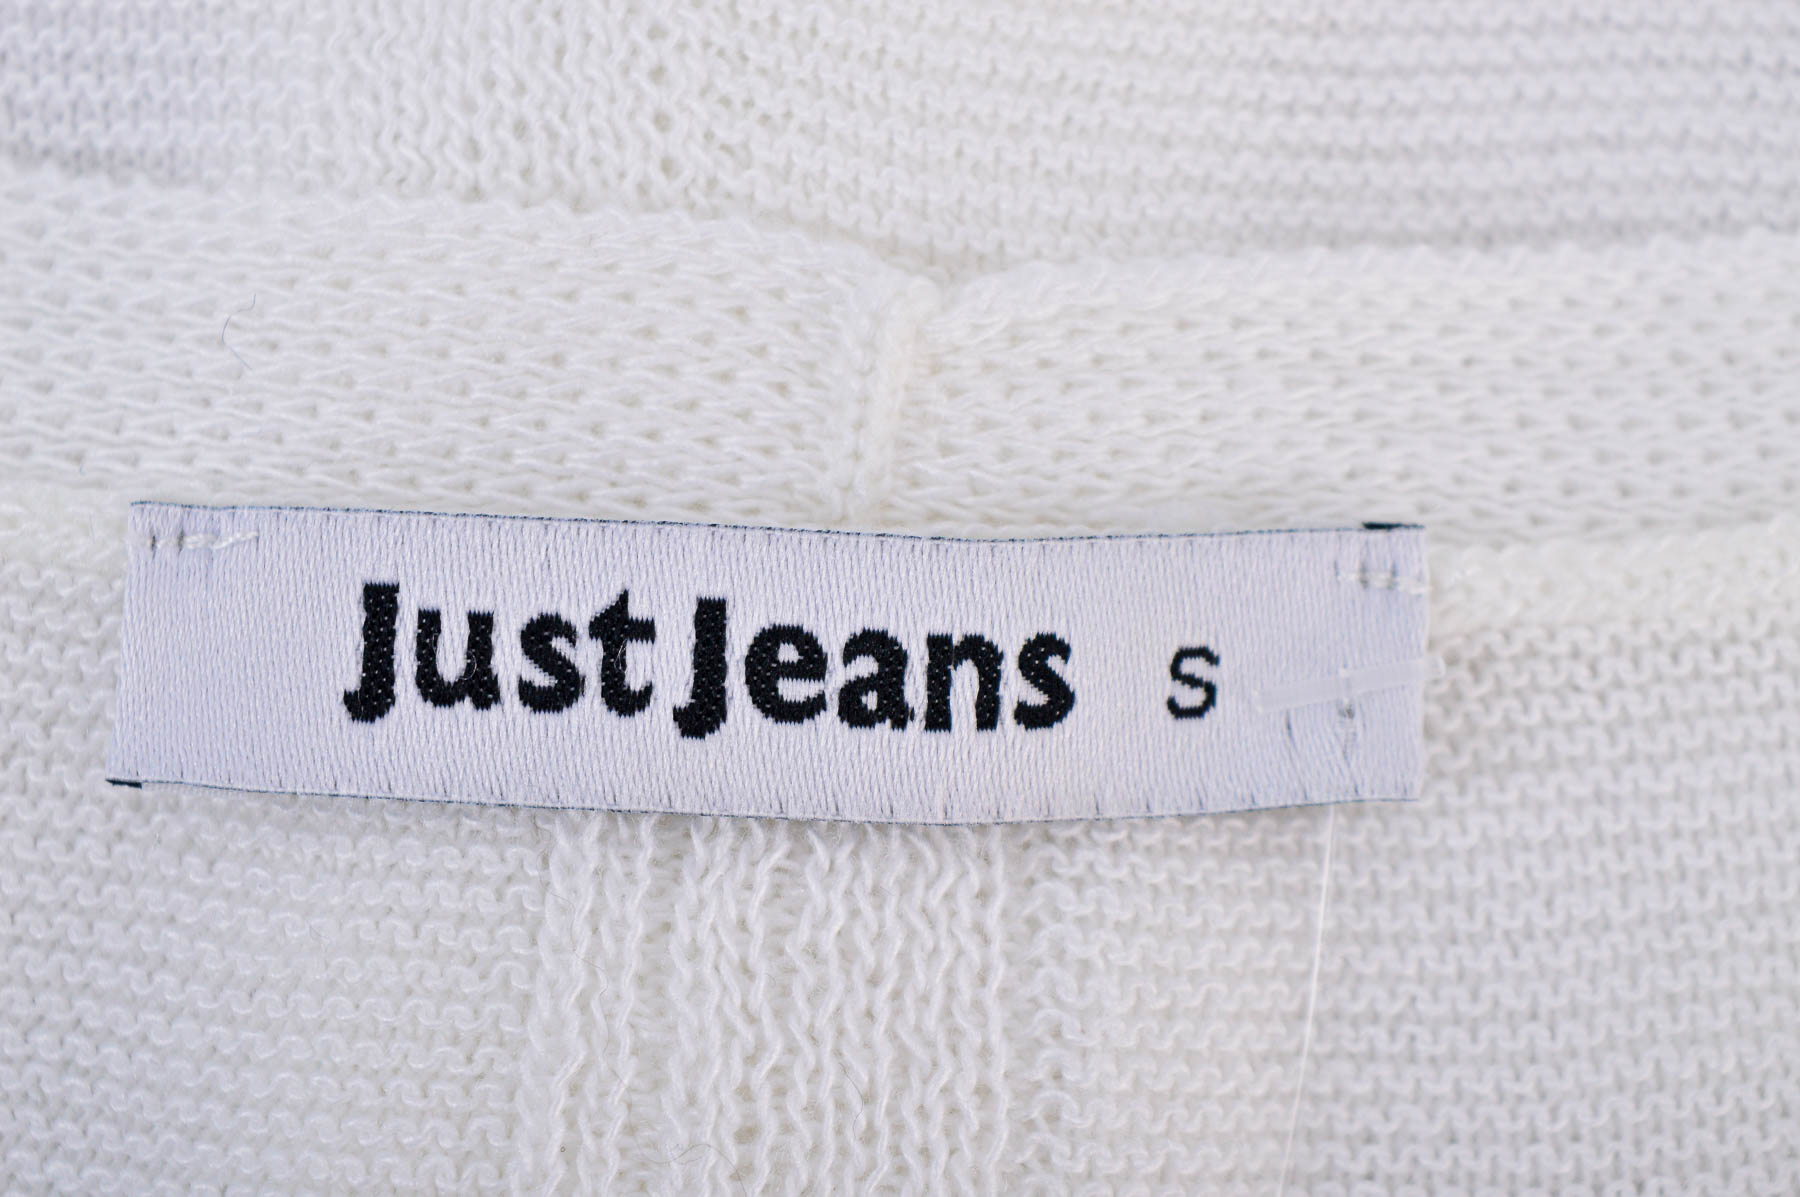 Women's sweater - Just Jeans - 2